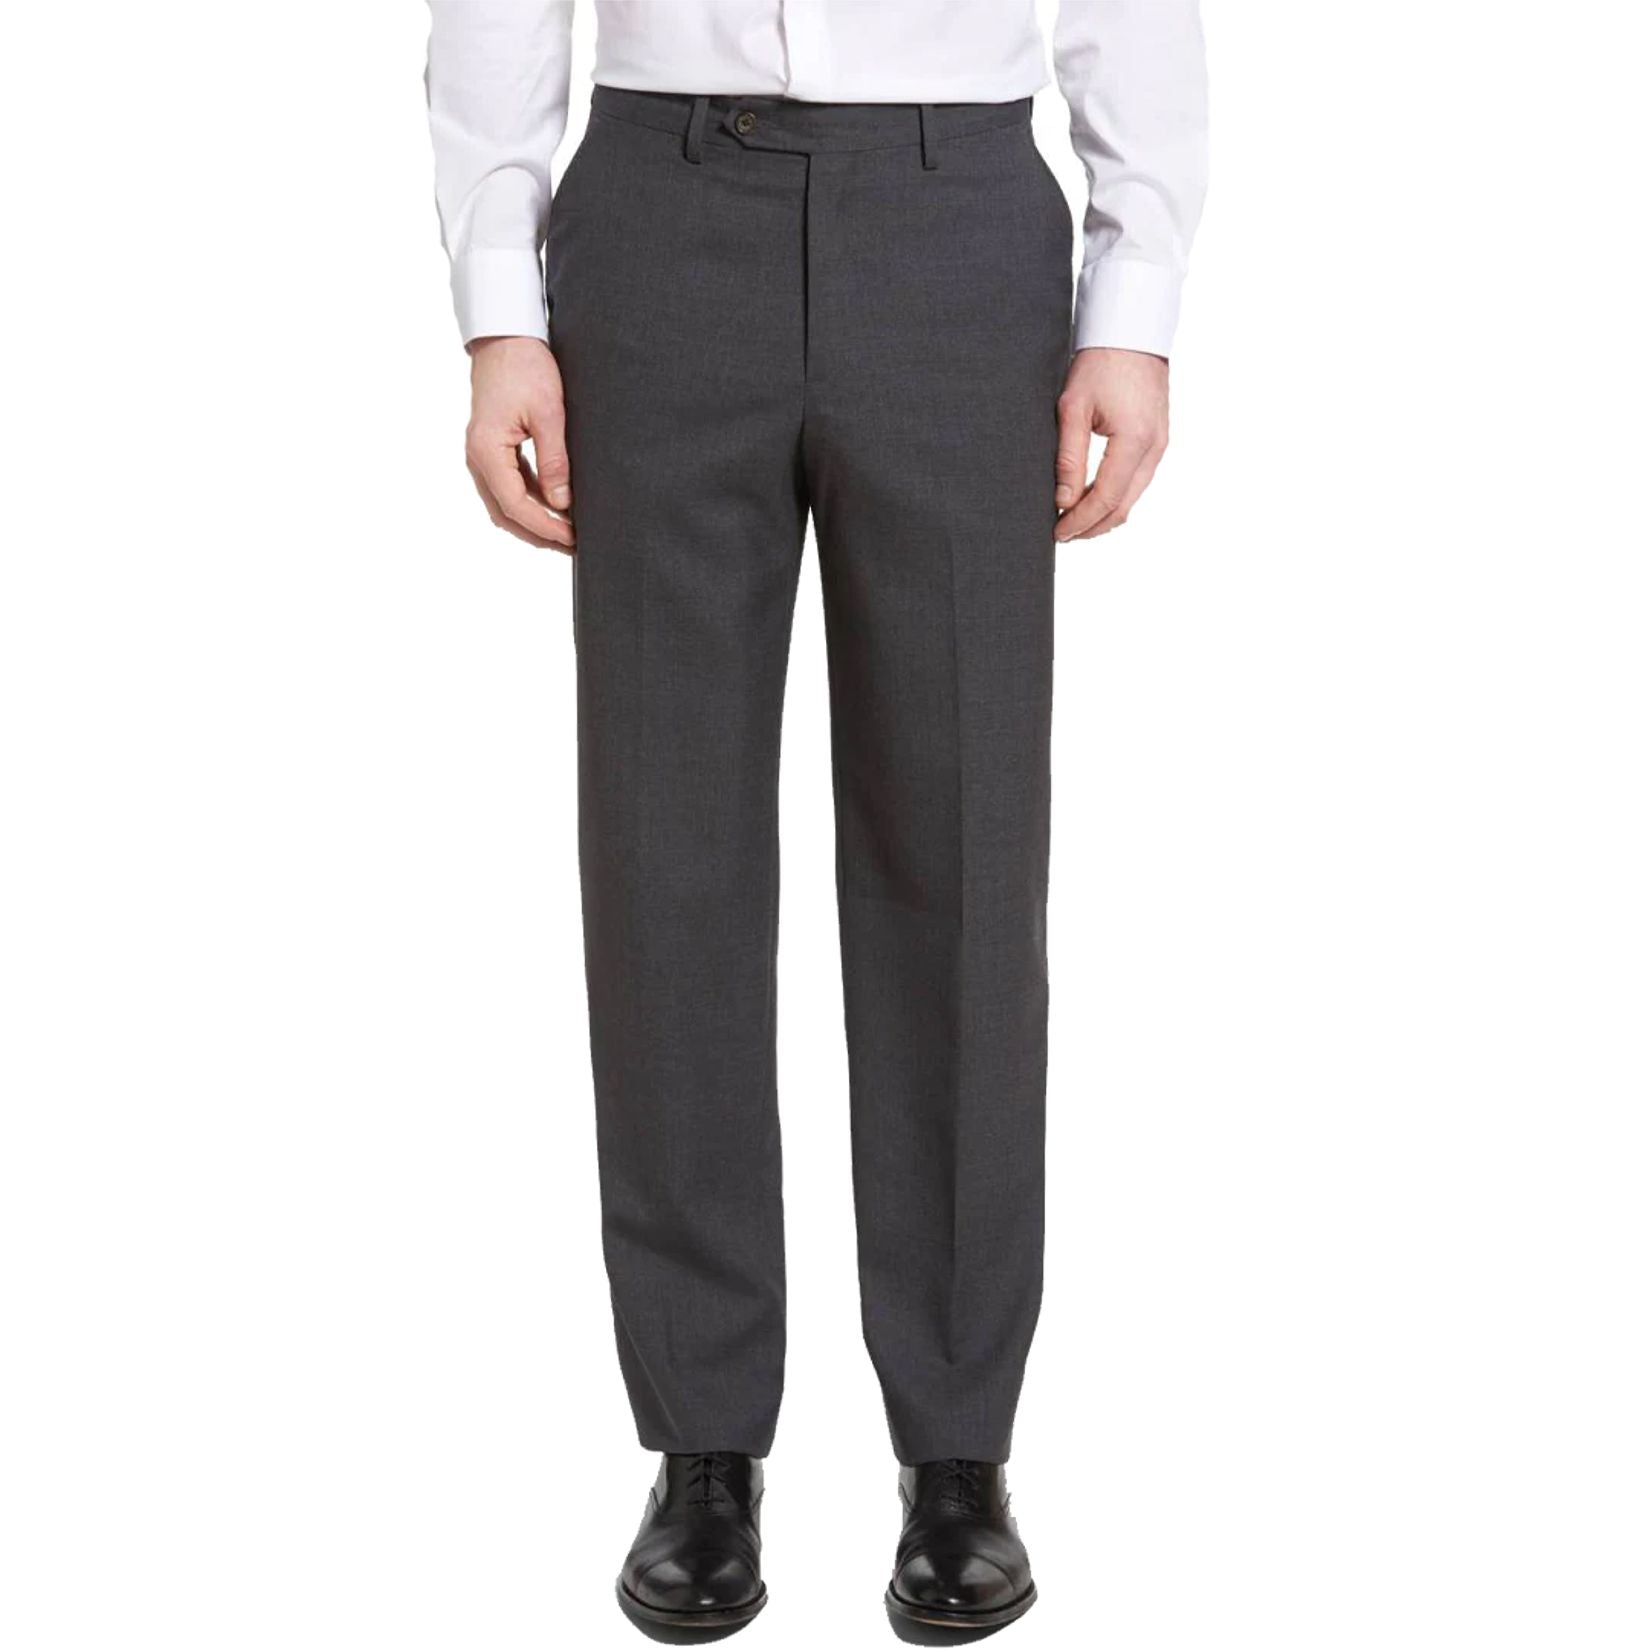 Worsted Wool Tropical Trouser in Medium Grey (Hampton Plain Front - Regular & Long Rise) by Berle